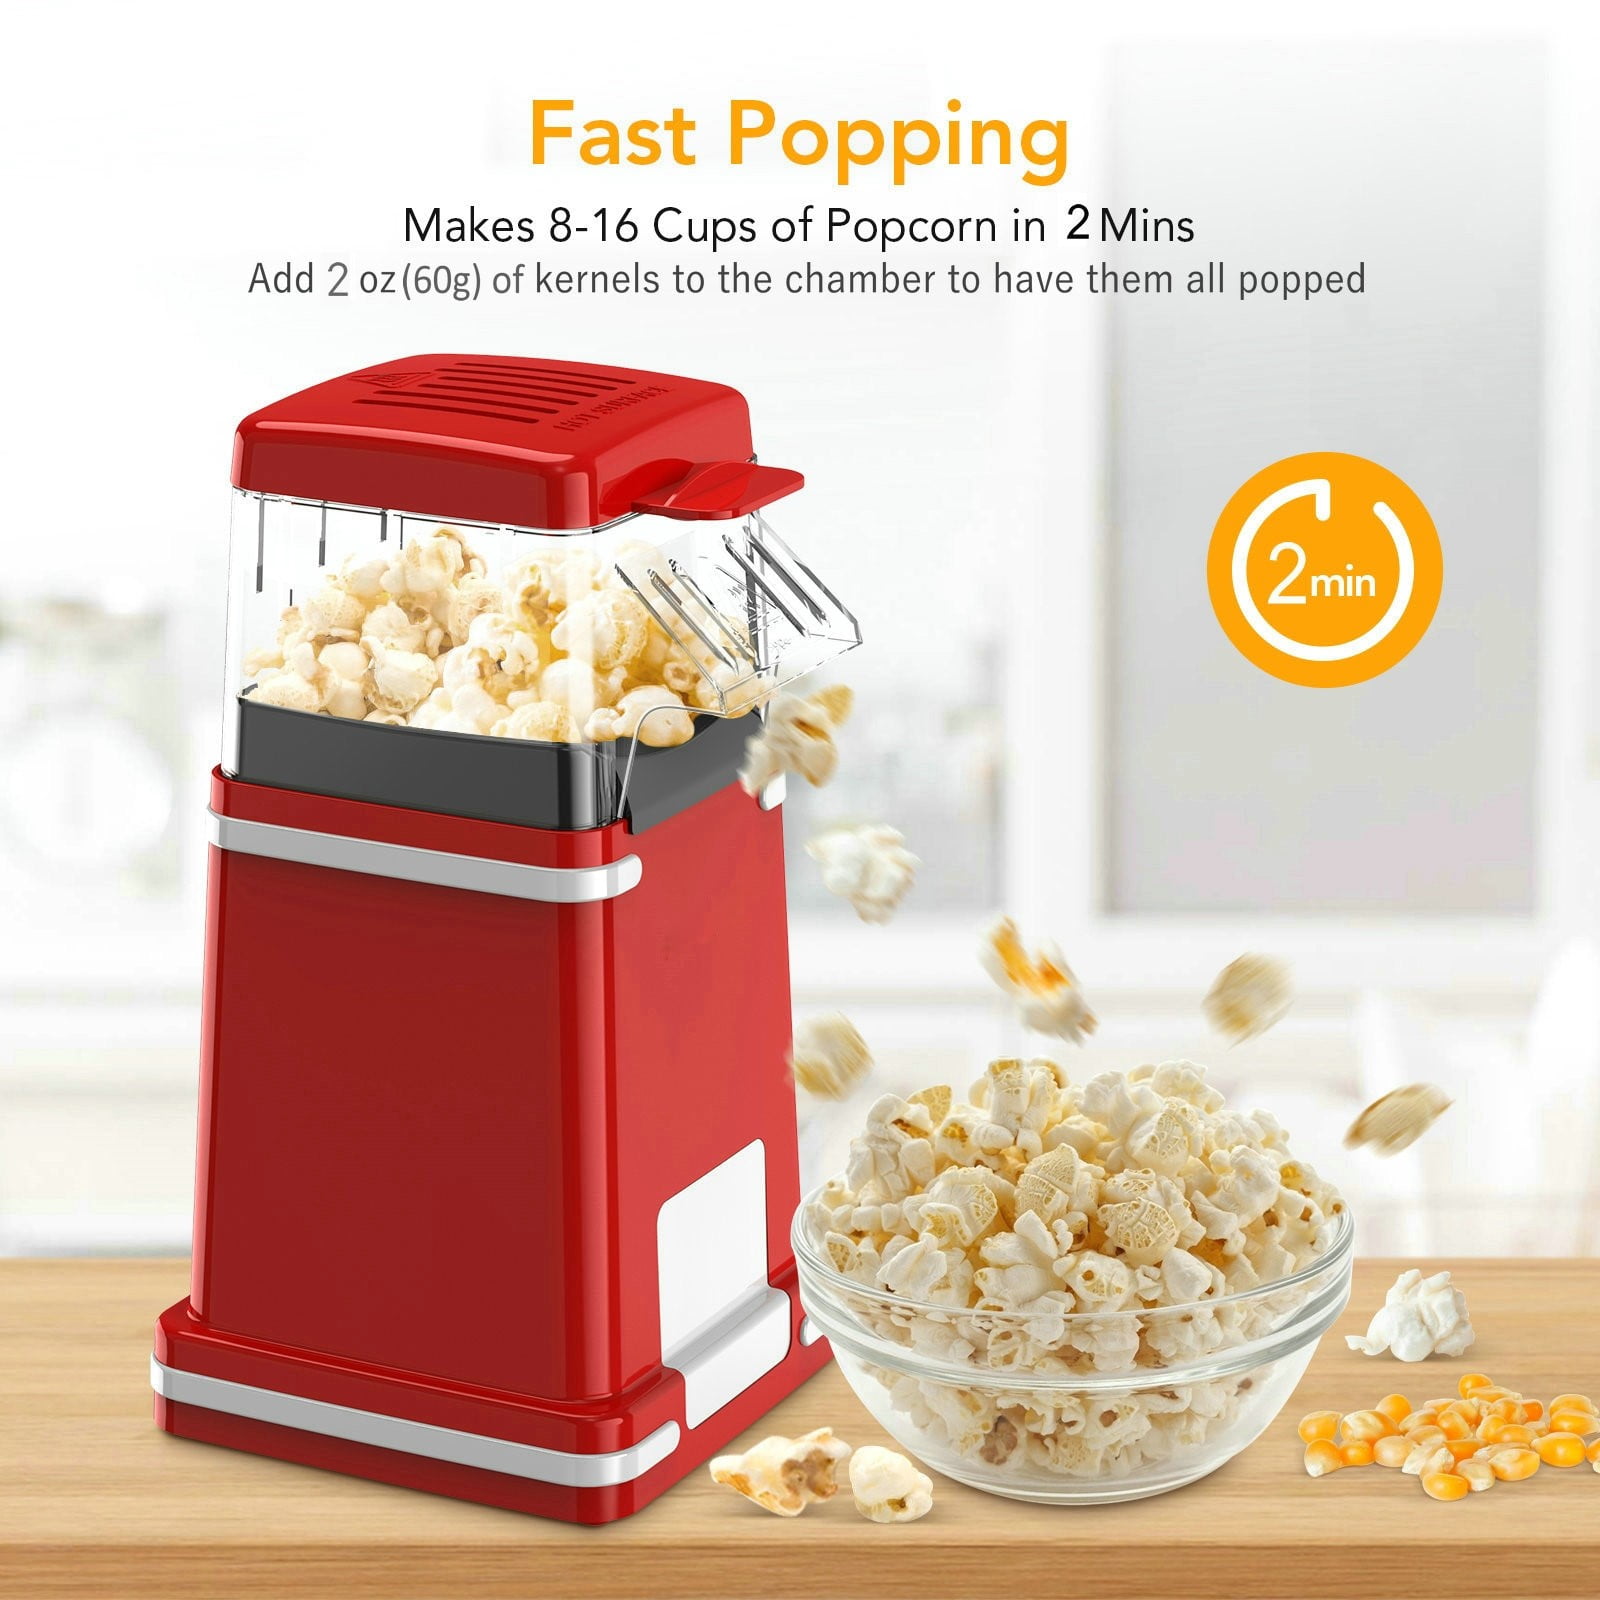 KAKAO FRIENDS Popcorn Maker Choonsik 1ea Best Price and Fast